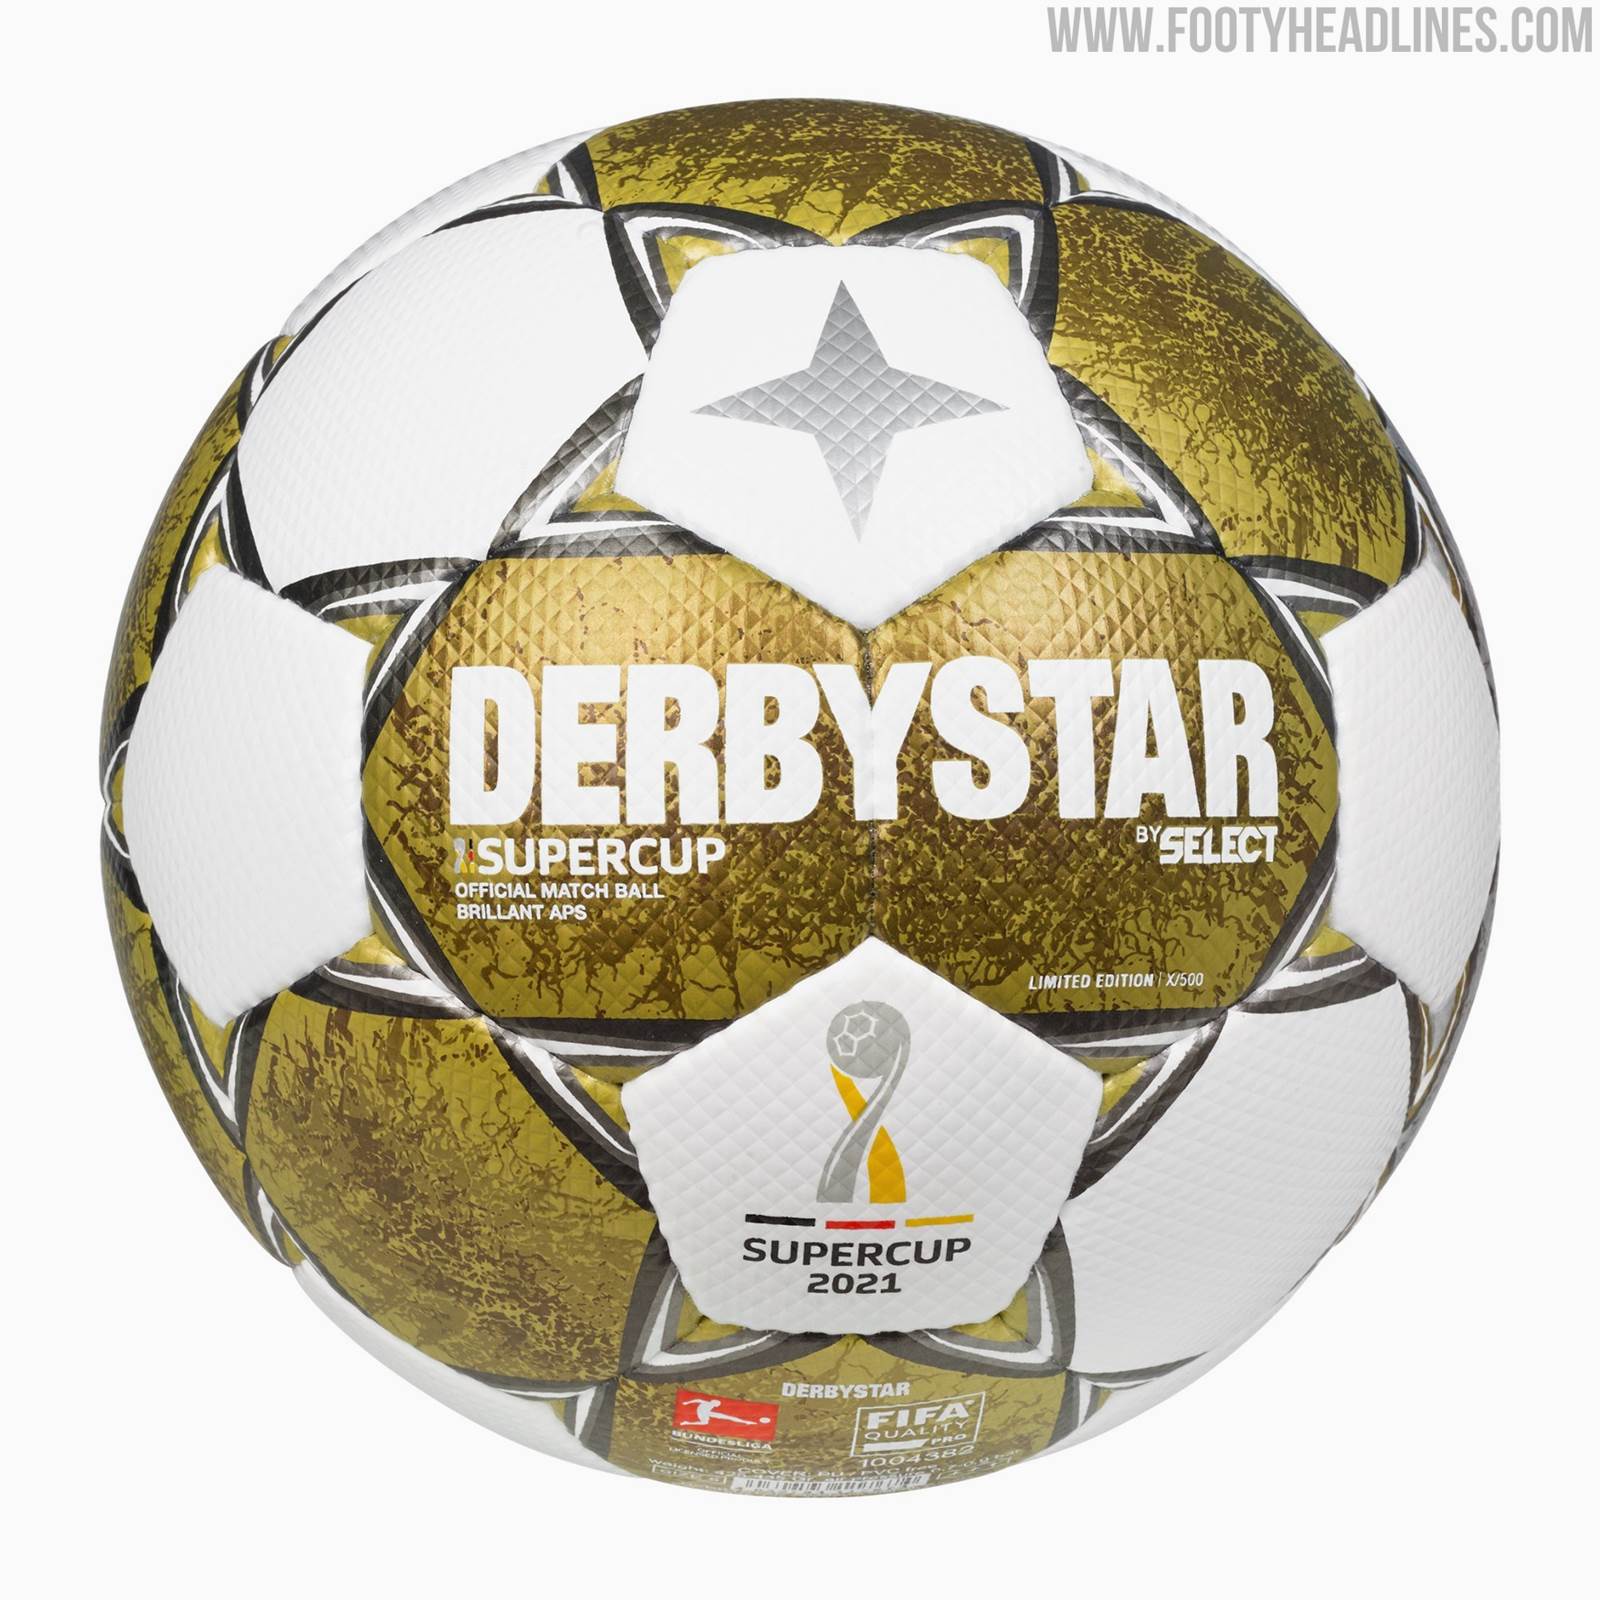 mat Hol Sneeuwstorm Derbystar 2021 German Super Cup Ball Released - Footy Headlines